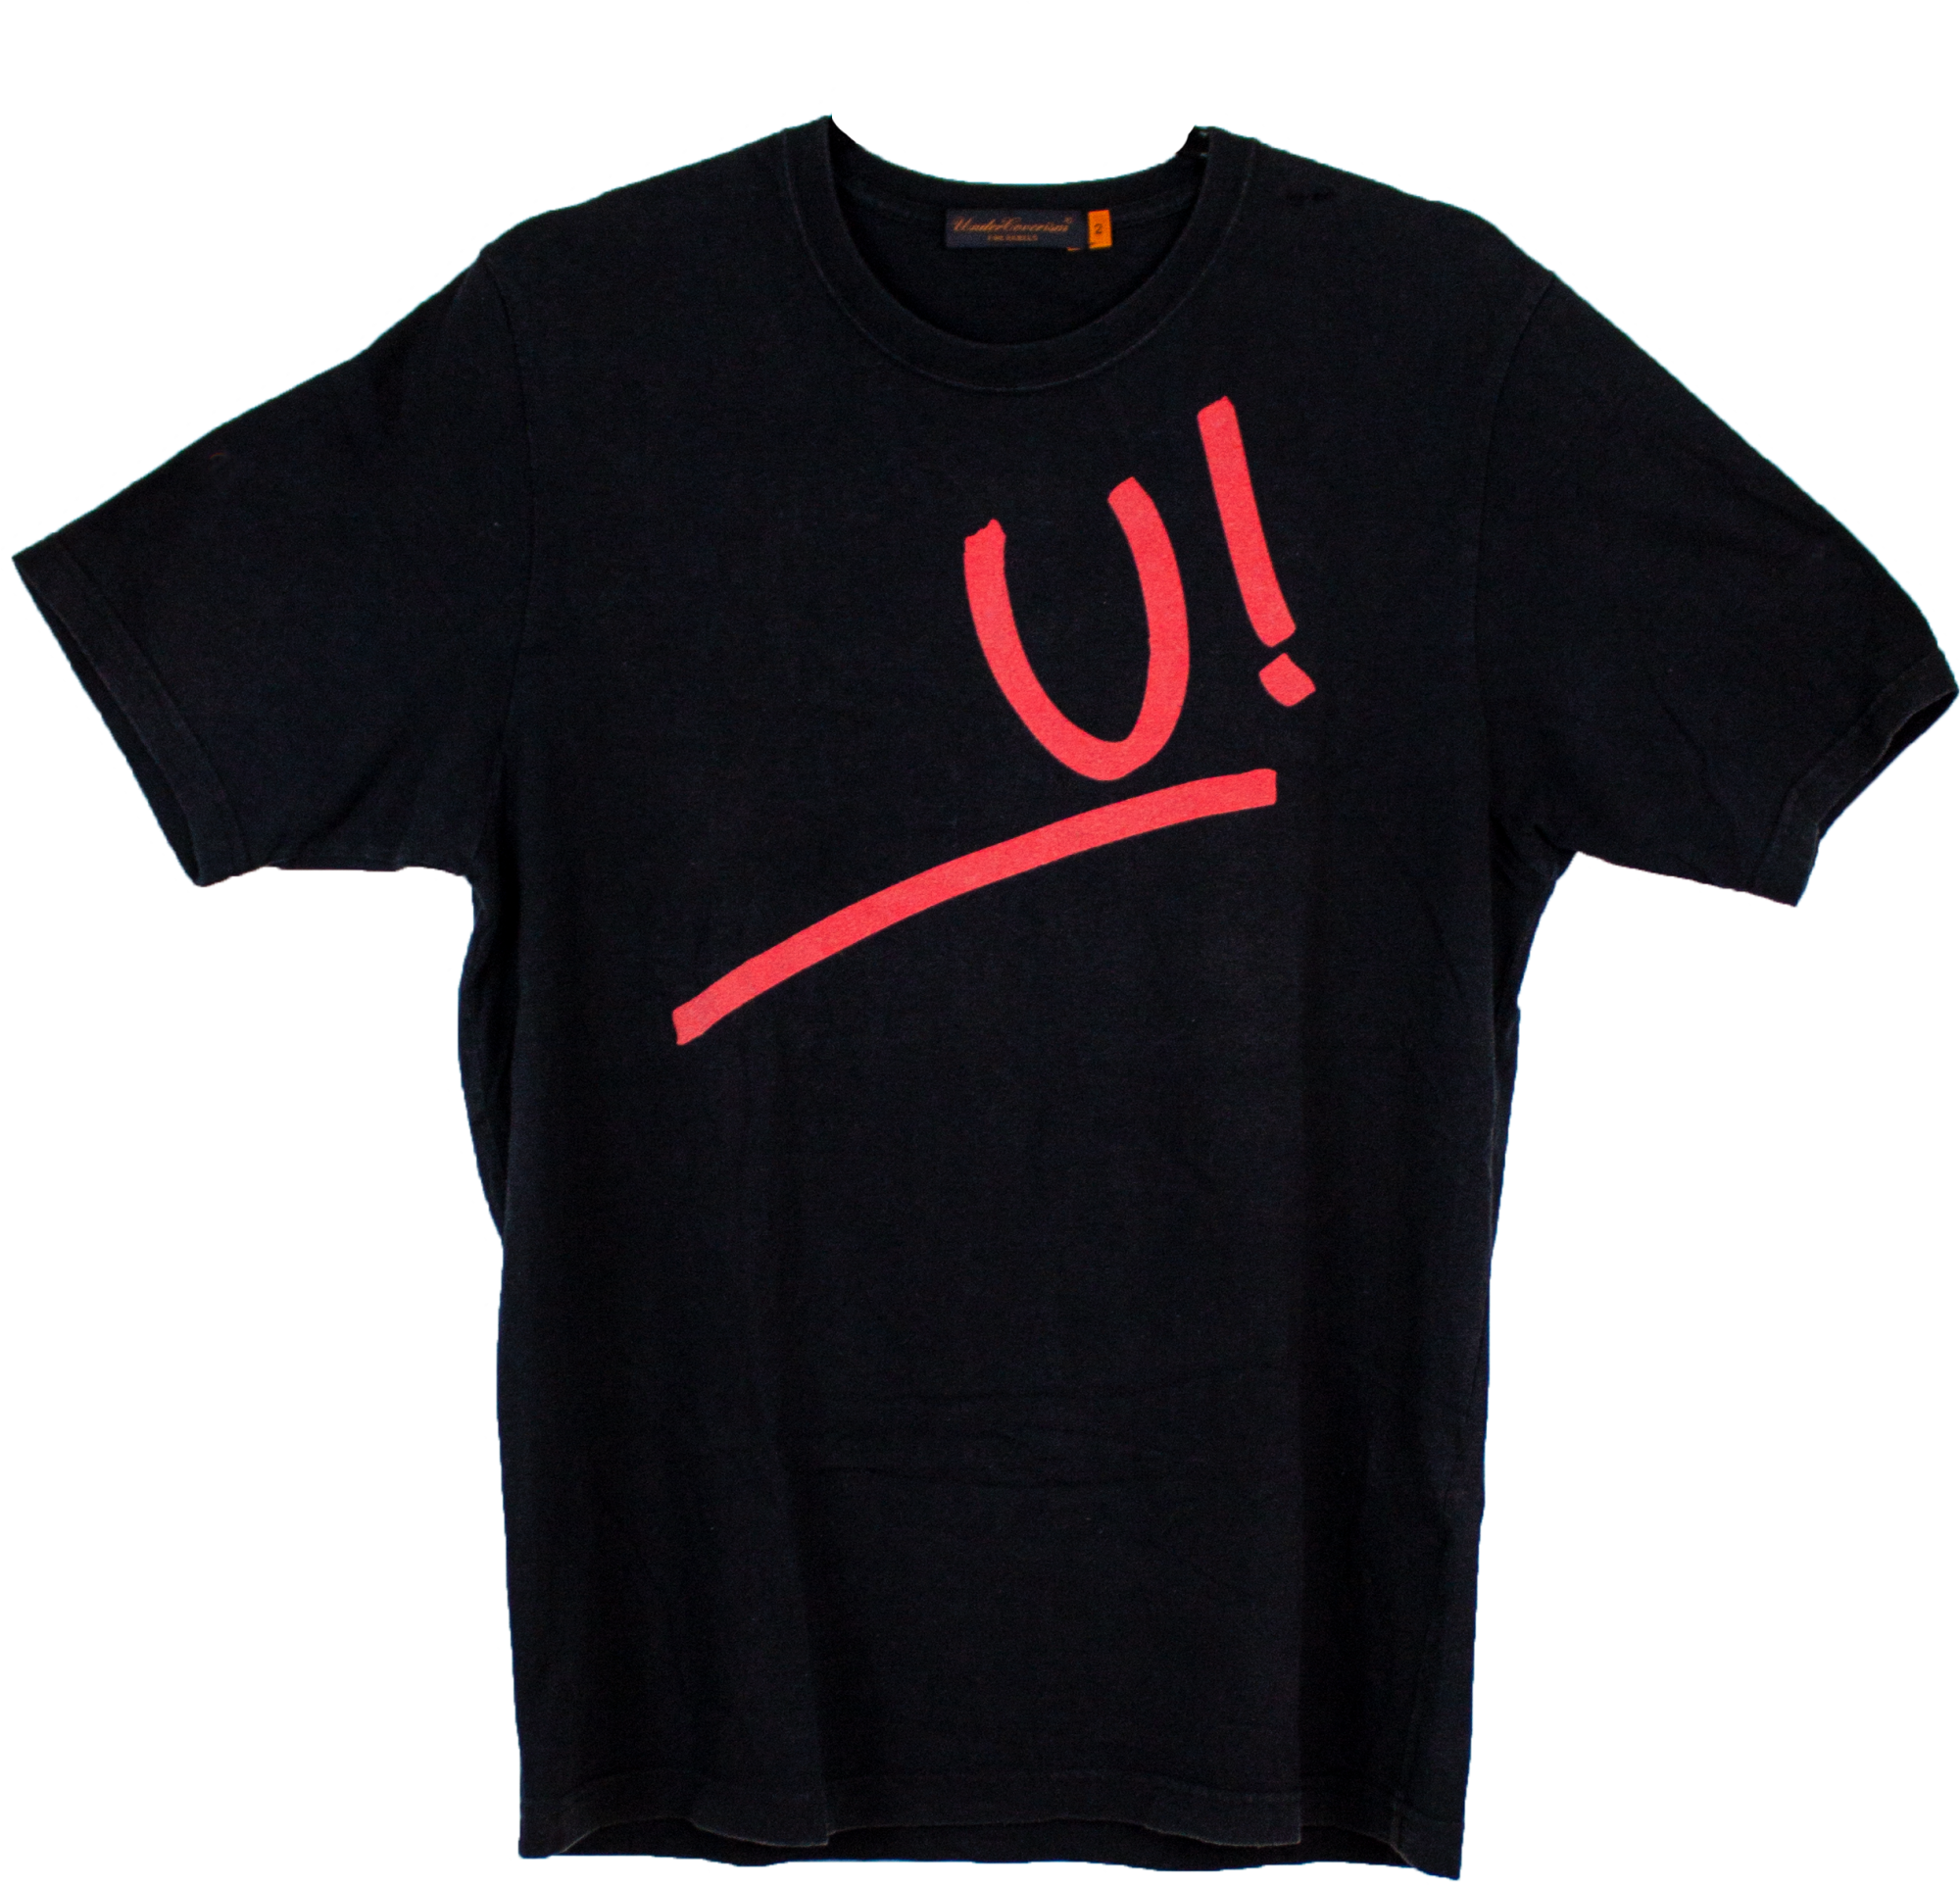 Undercoverism for Rebels U! T-shirt